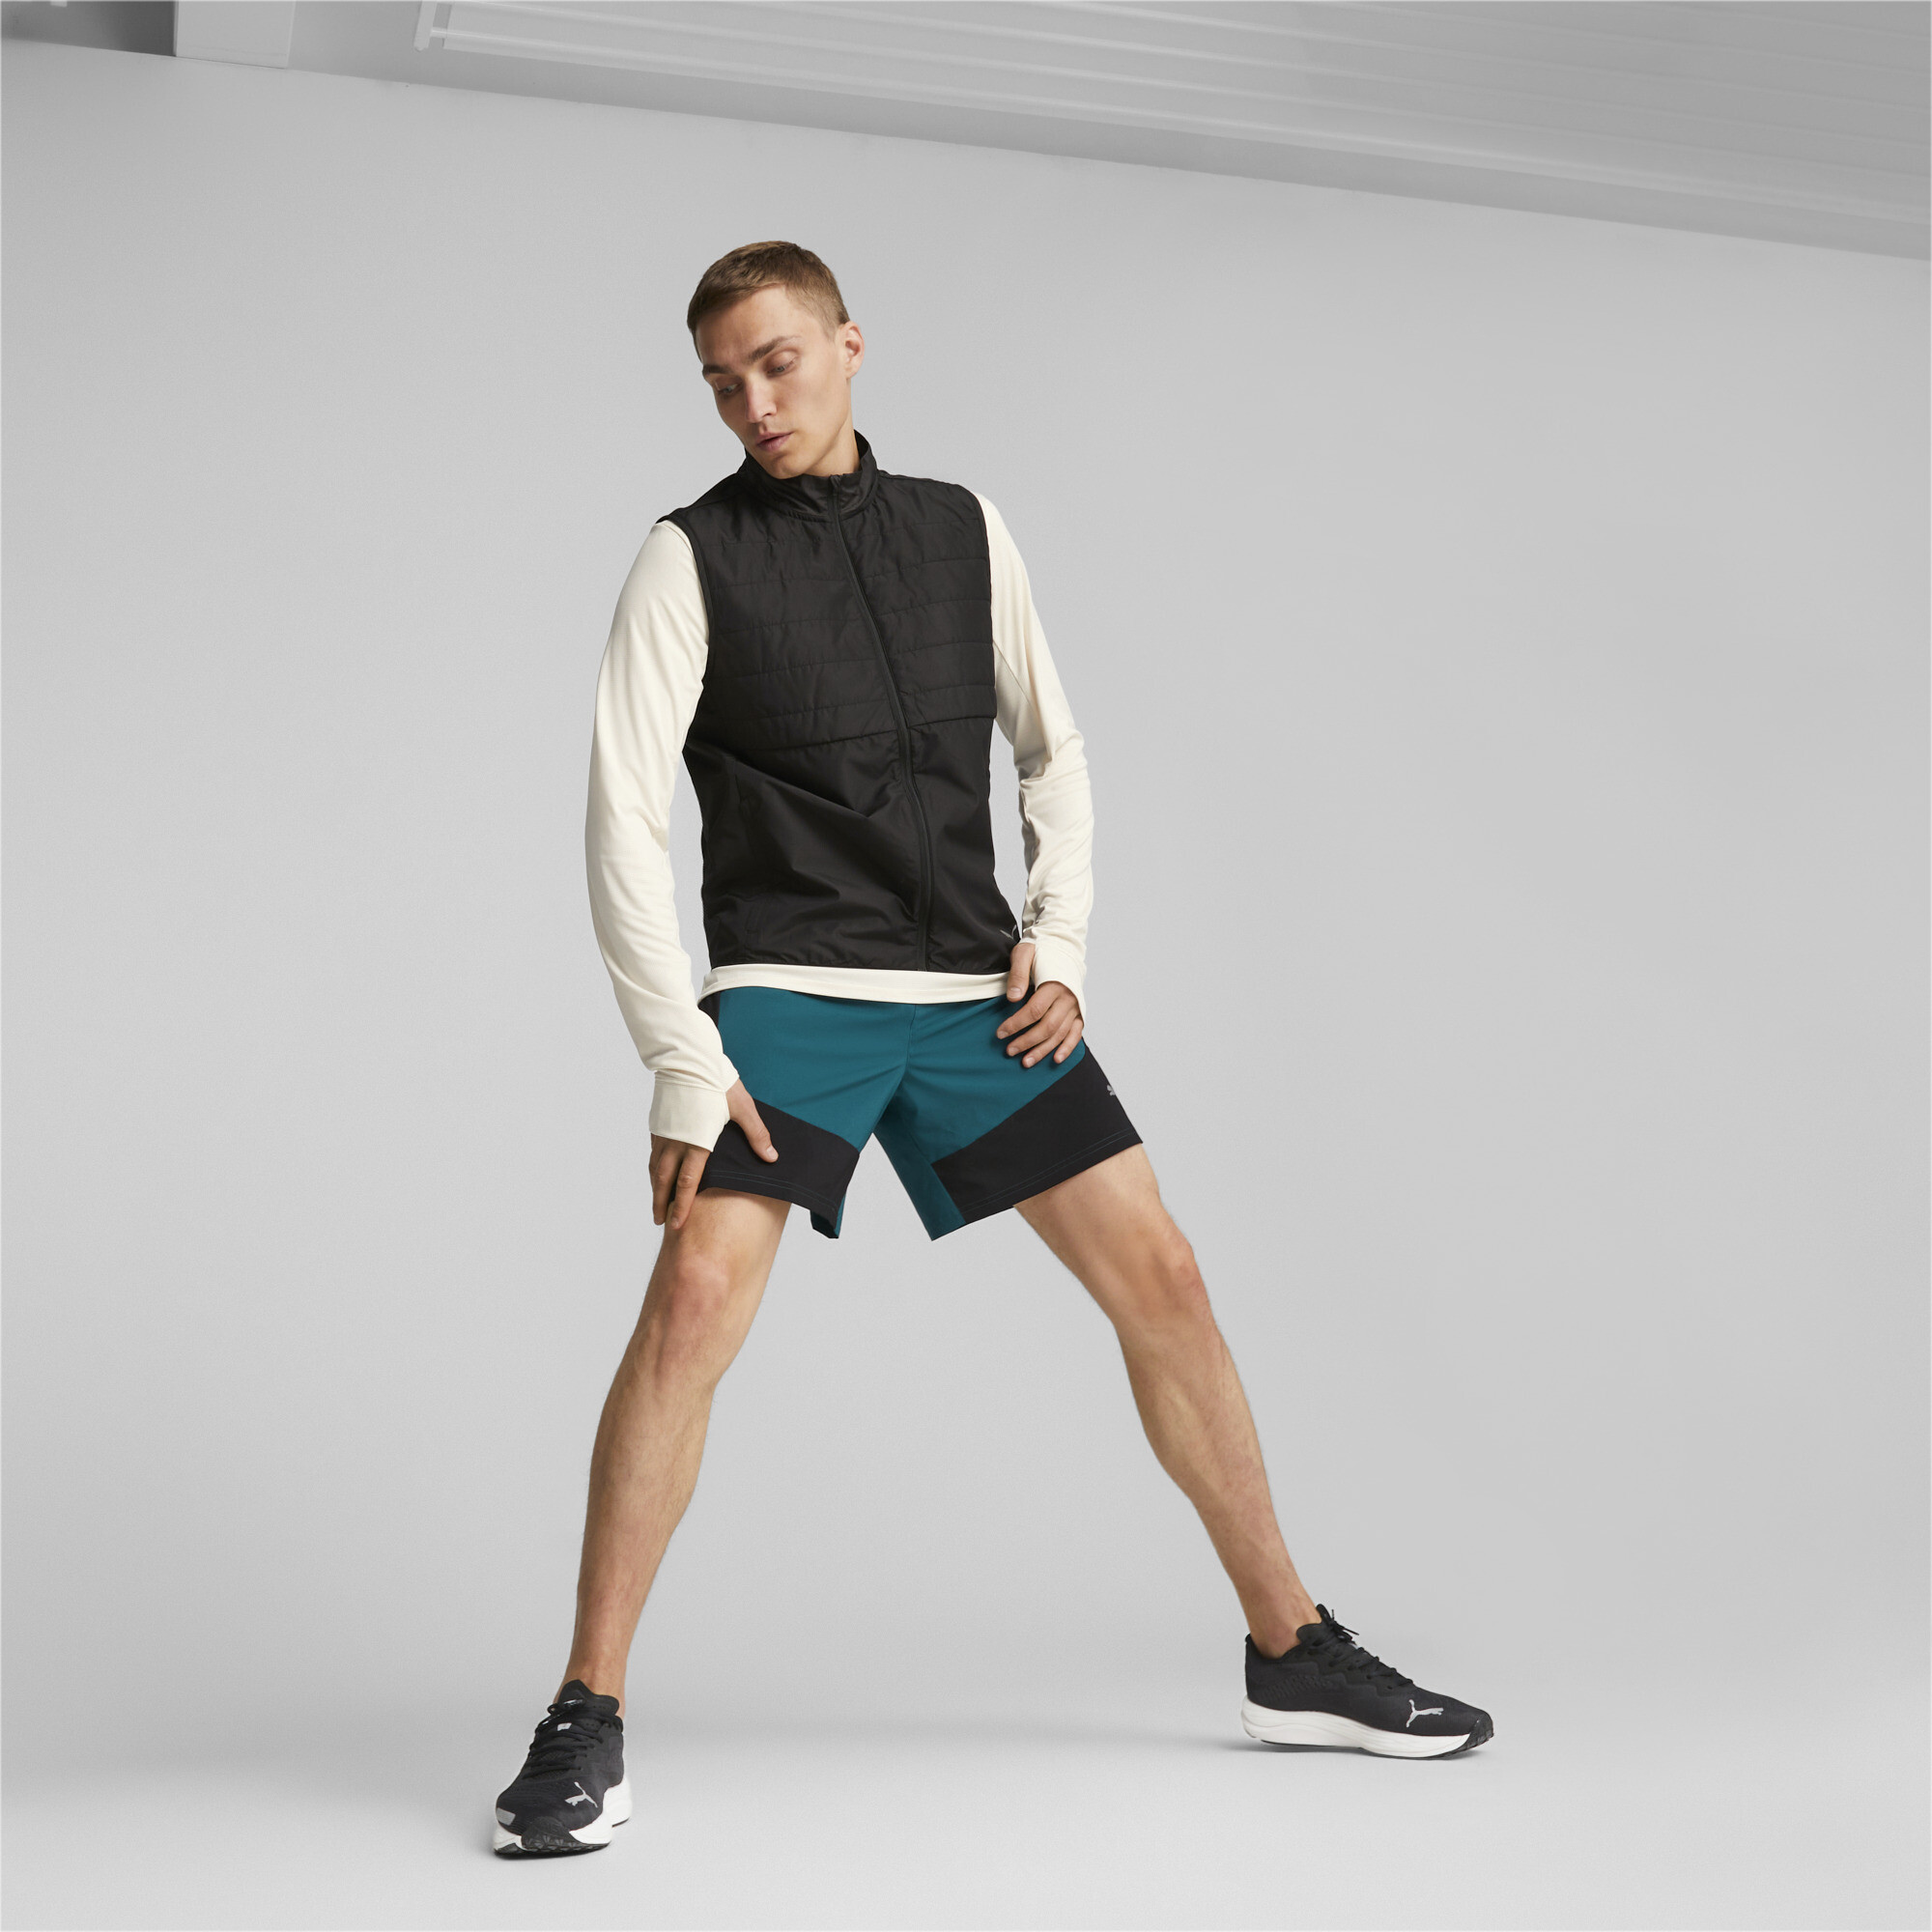 Men's Puma Run Favourite's Running Puffer Vest, Black, Size M, Clothing